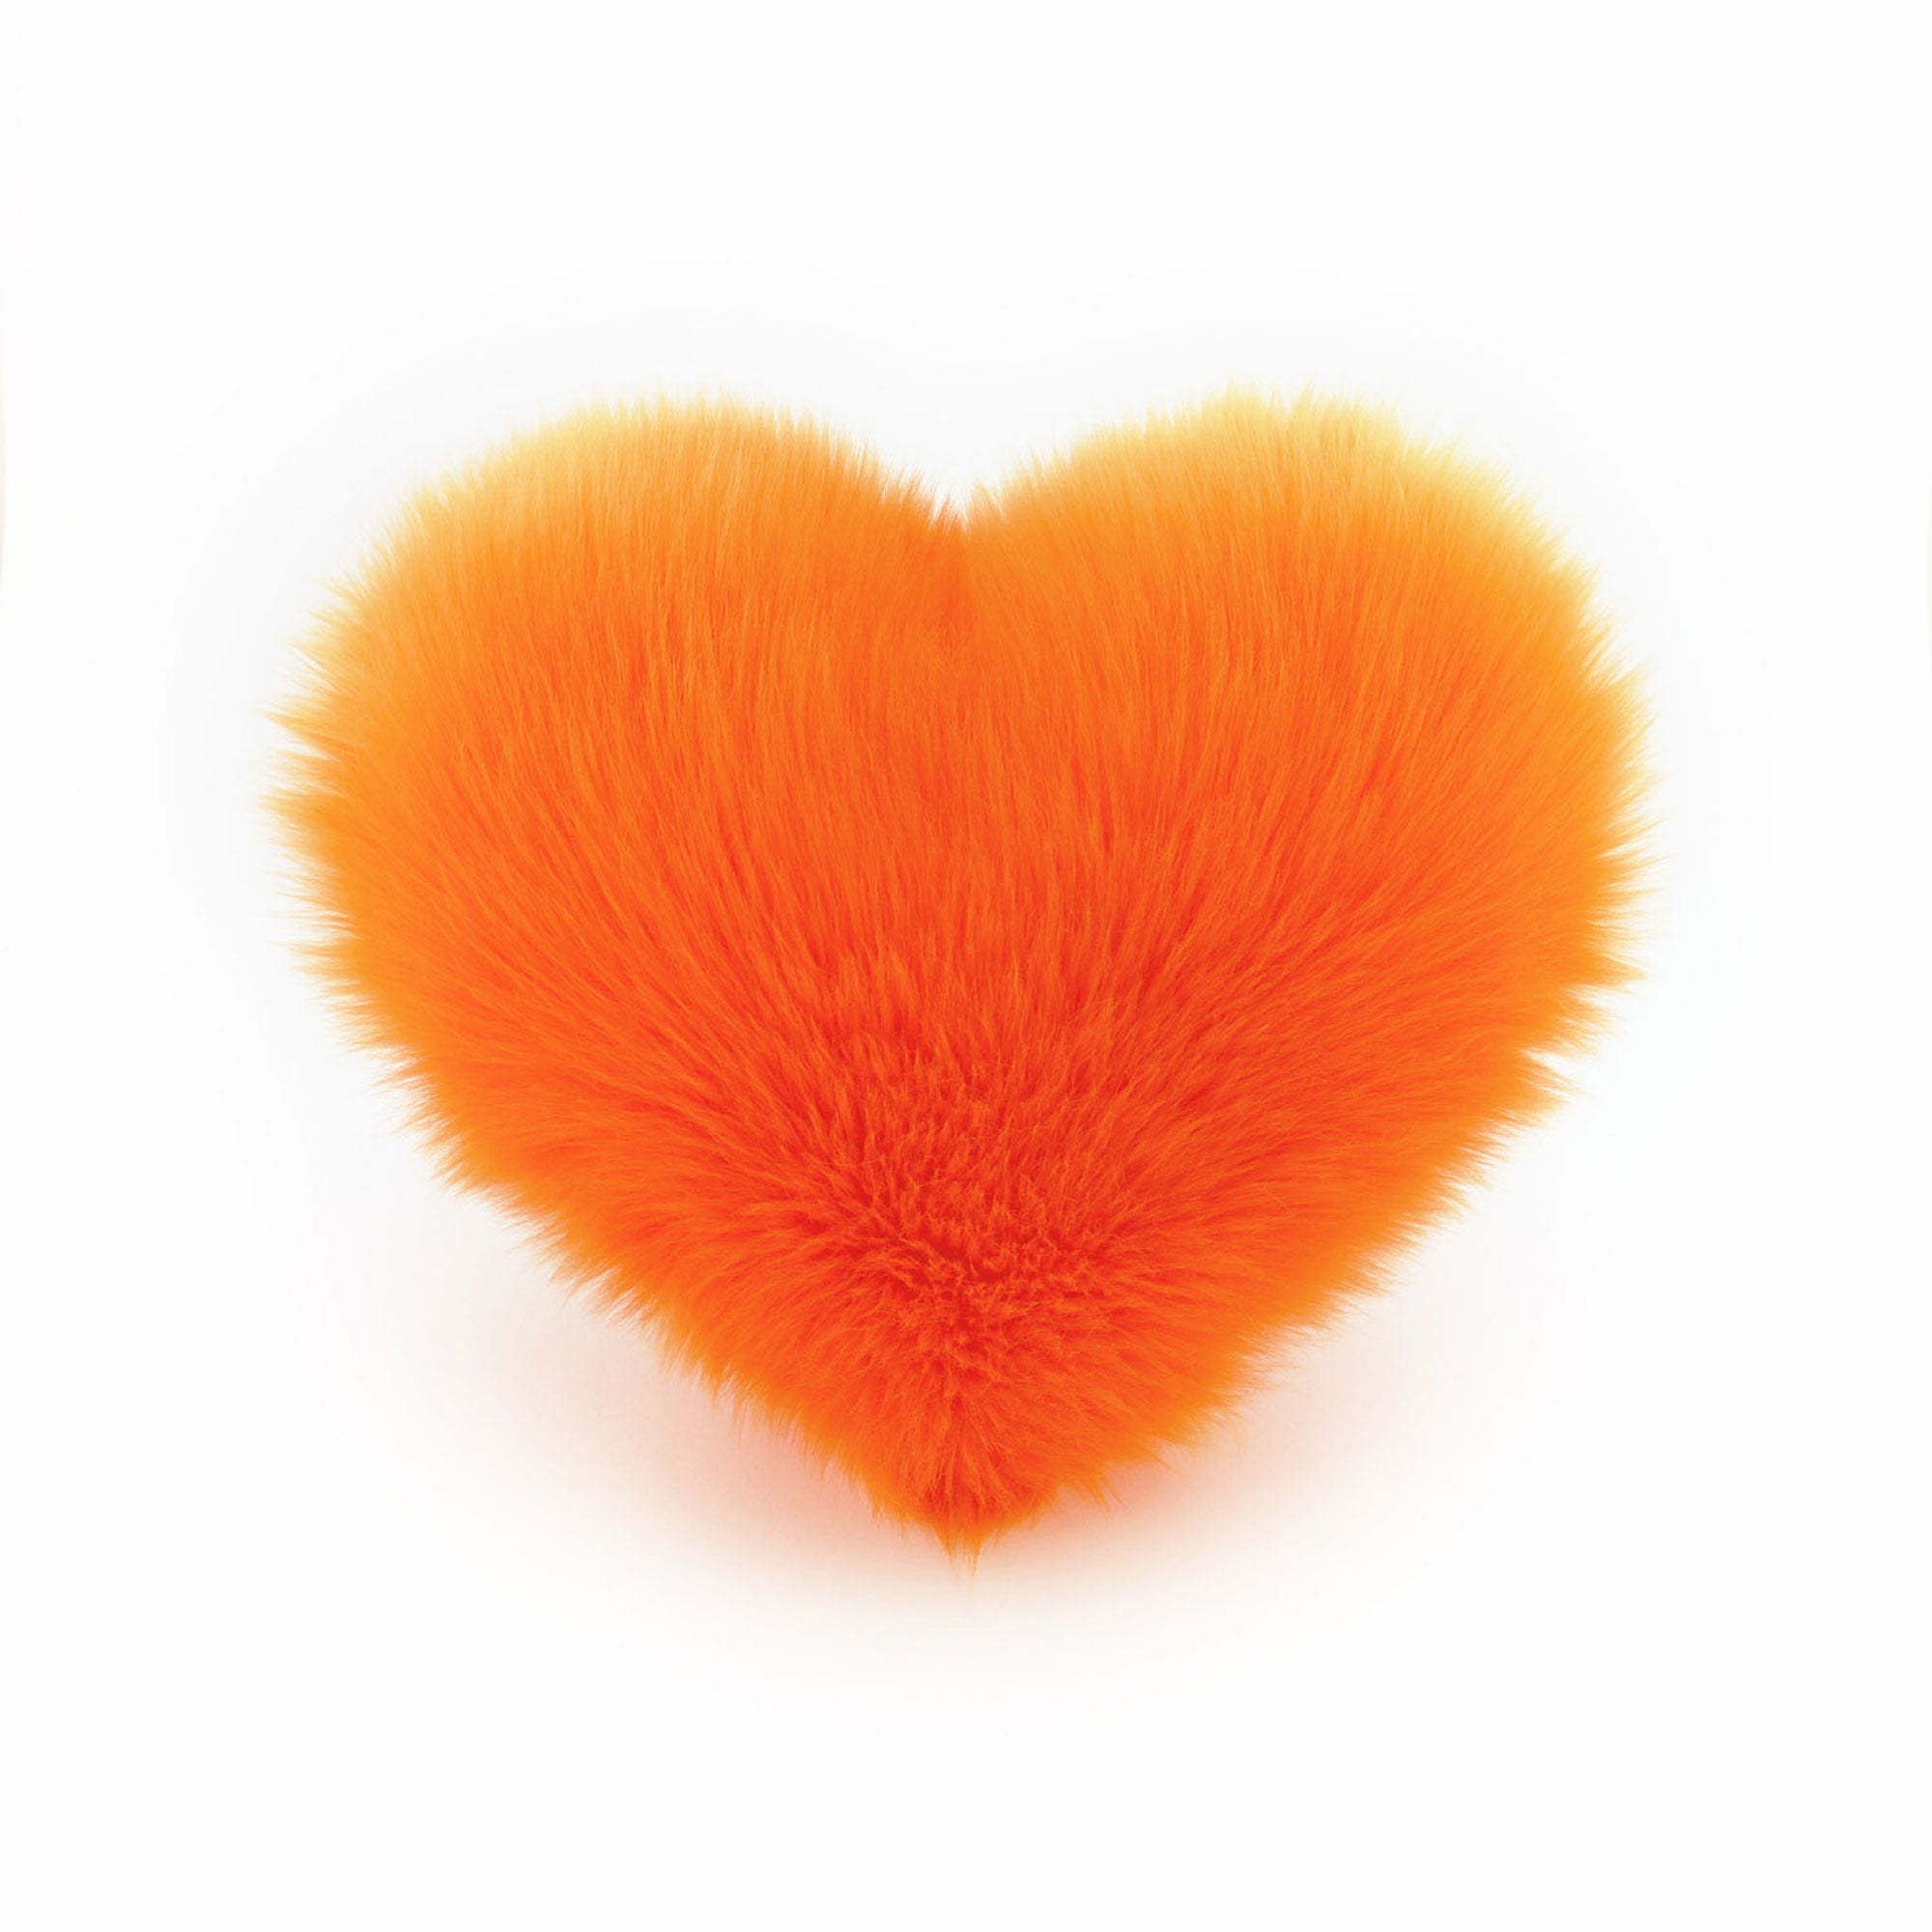 Orange faux fur heart shaped decorative throw pillow.